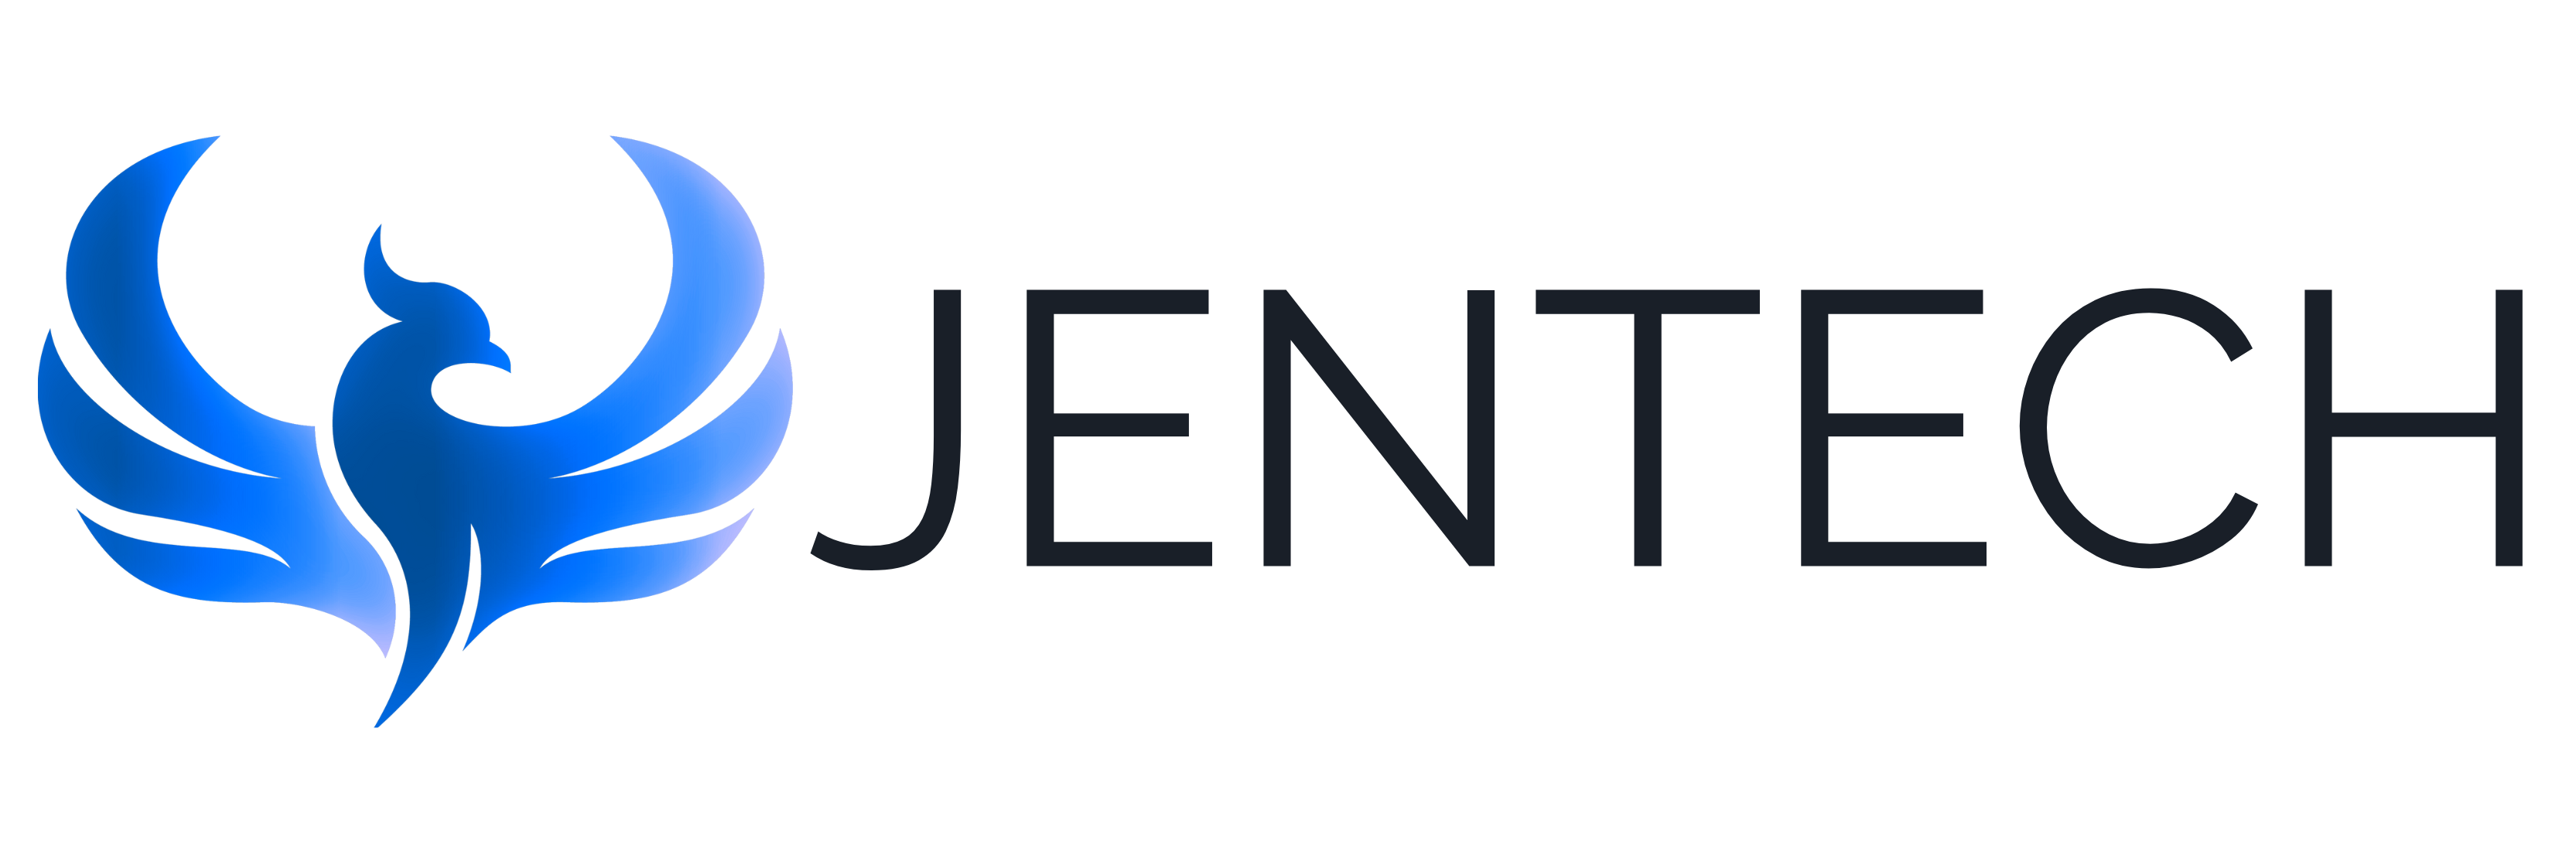 Jentech Logo